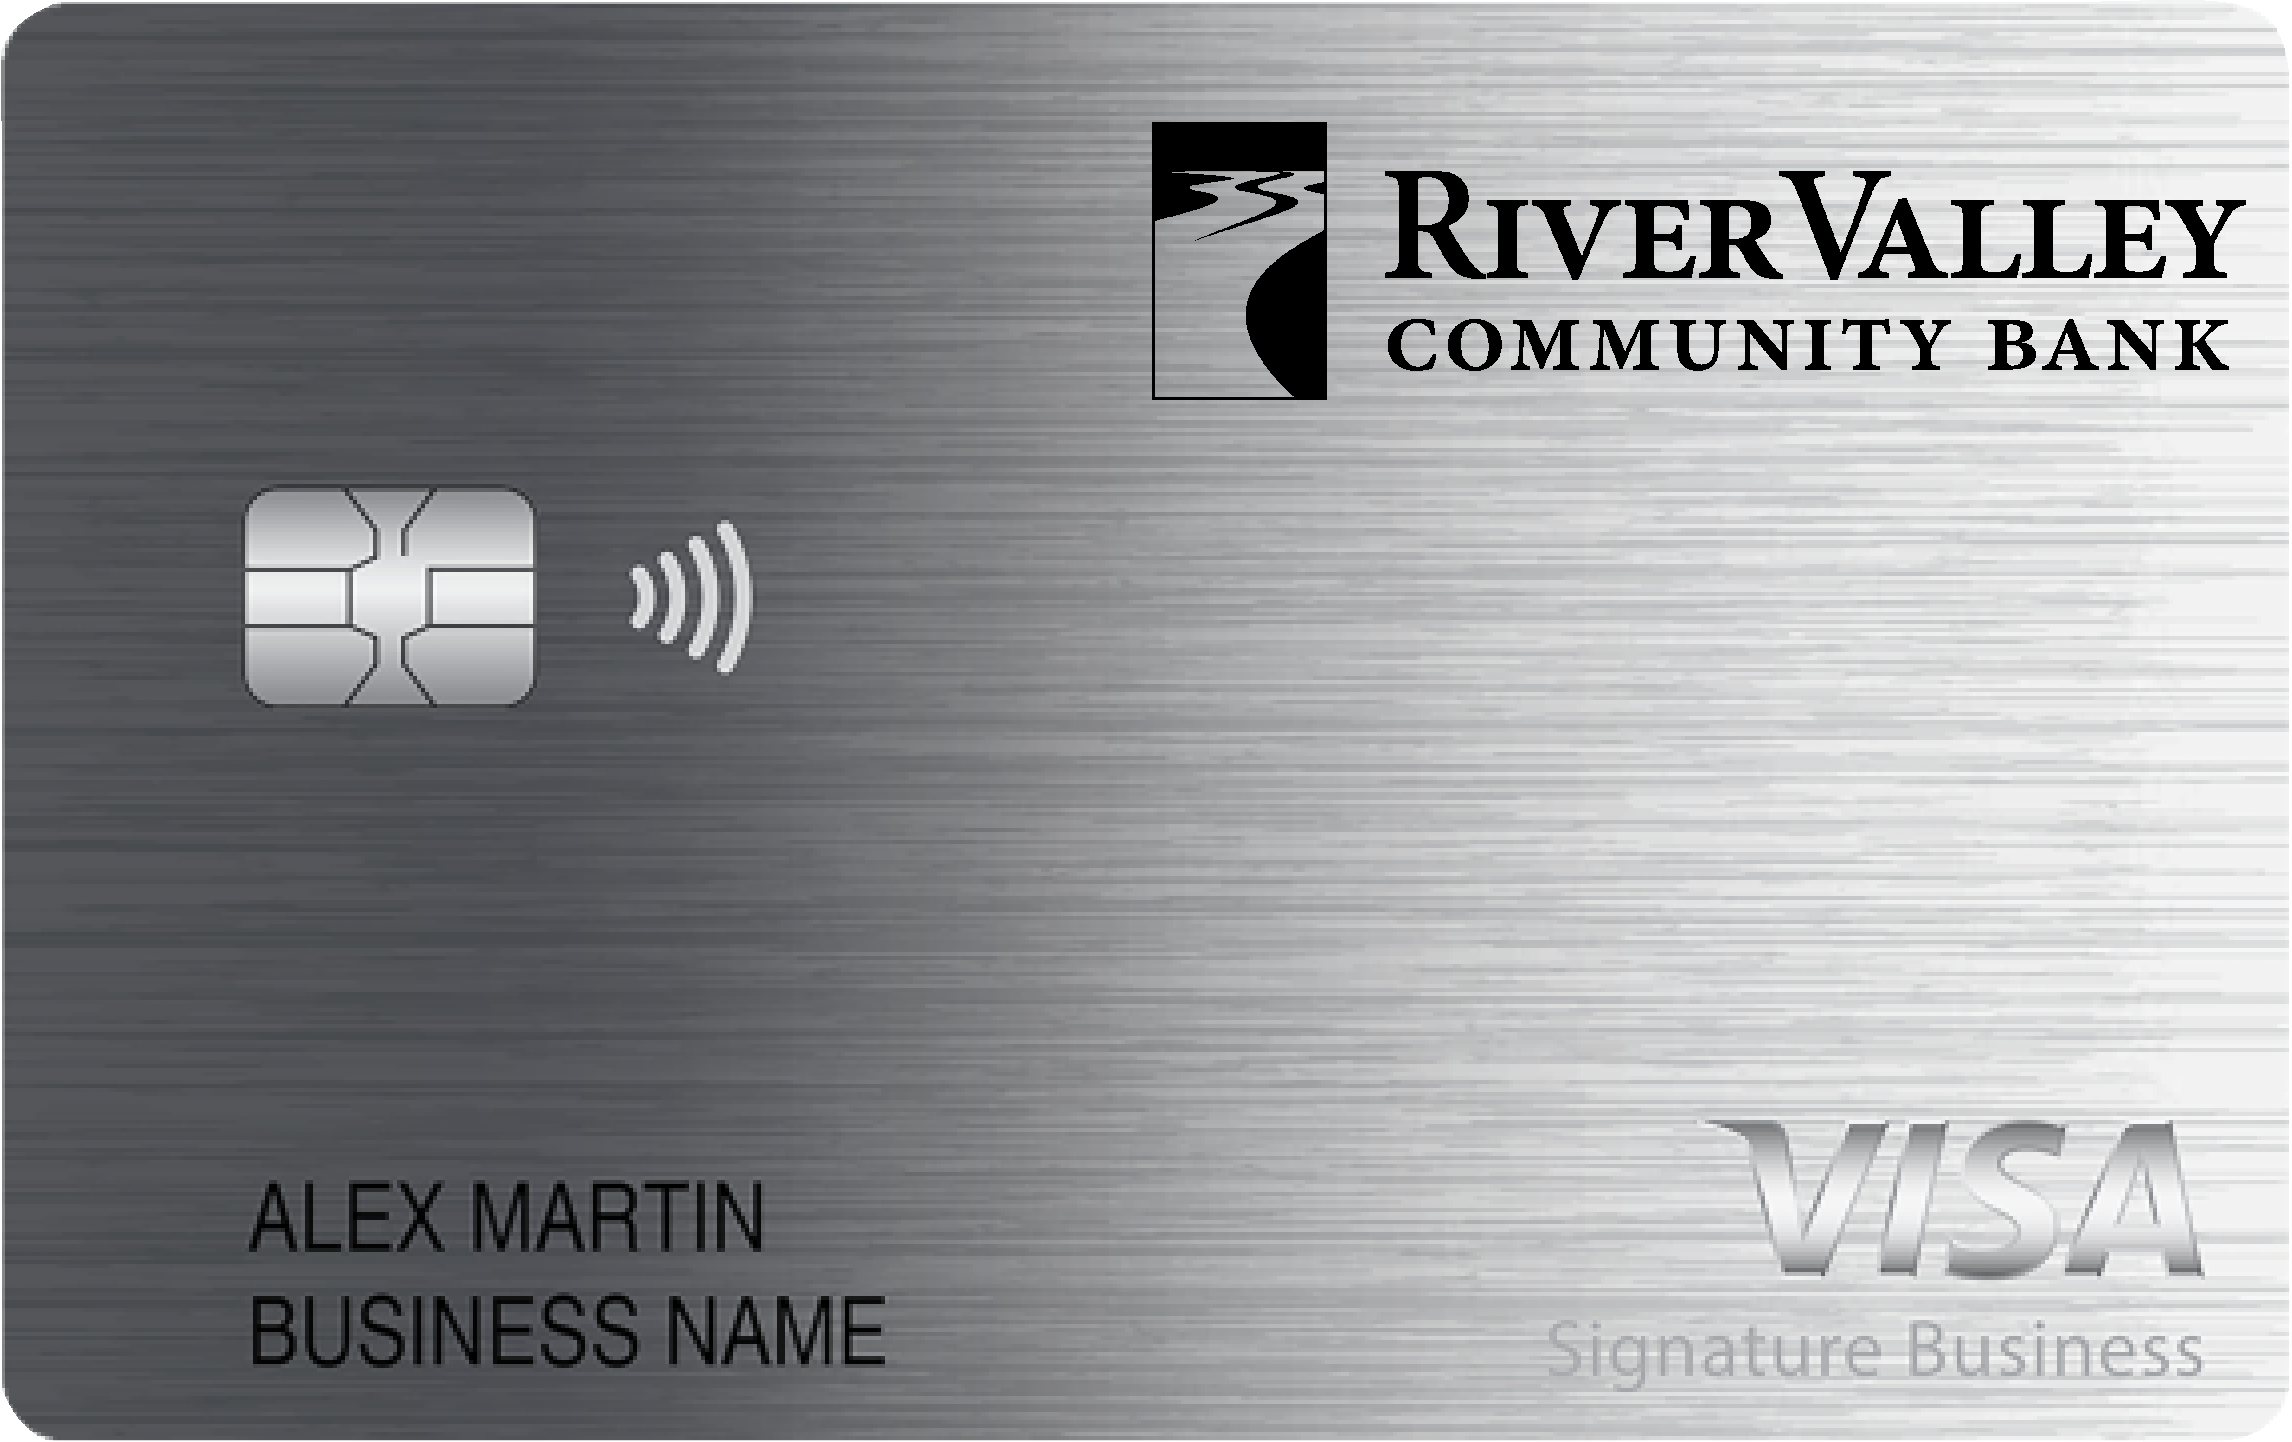 River Valley Community Bank Smart Business Rewards Card